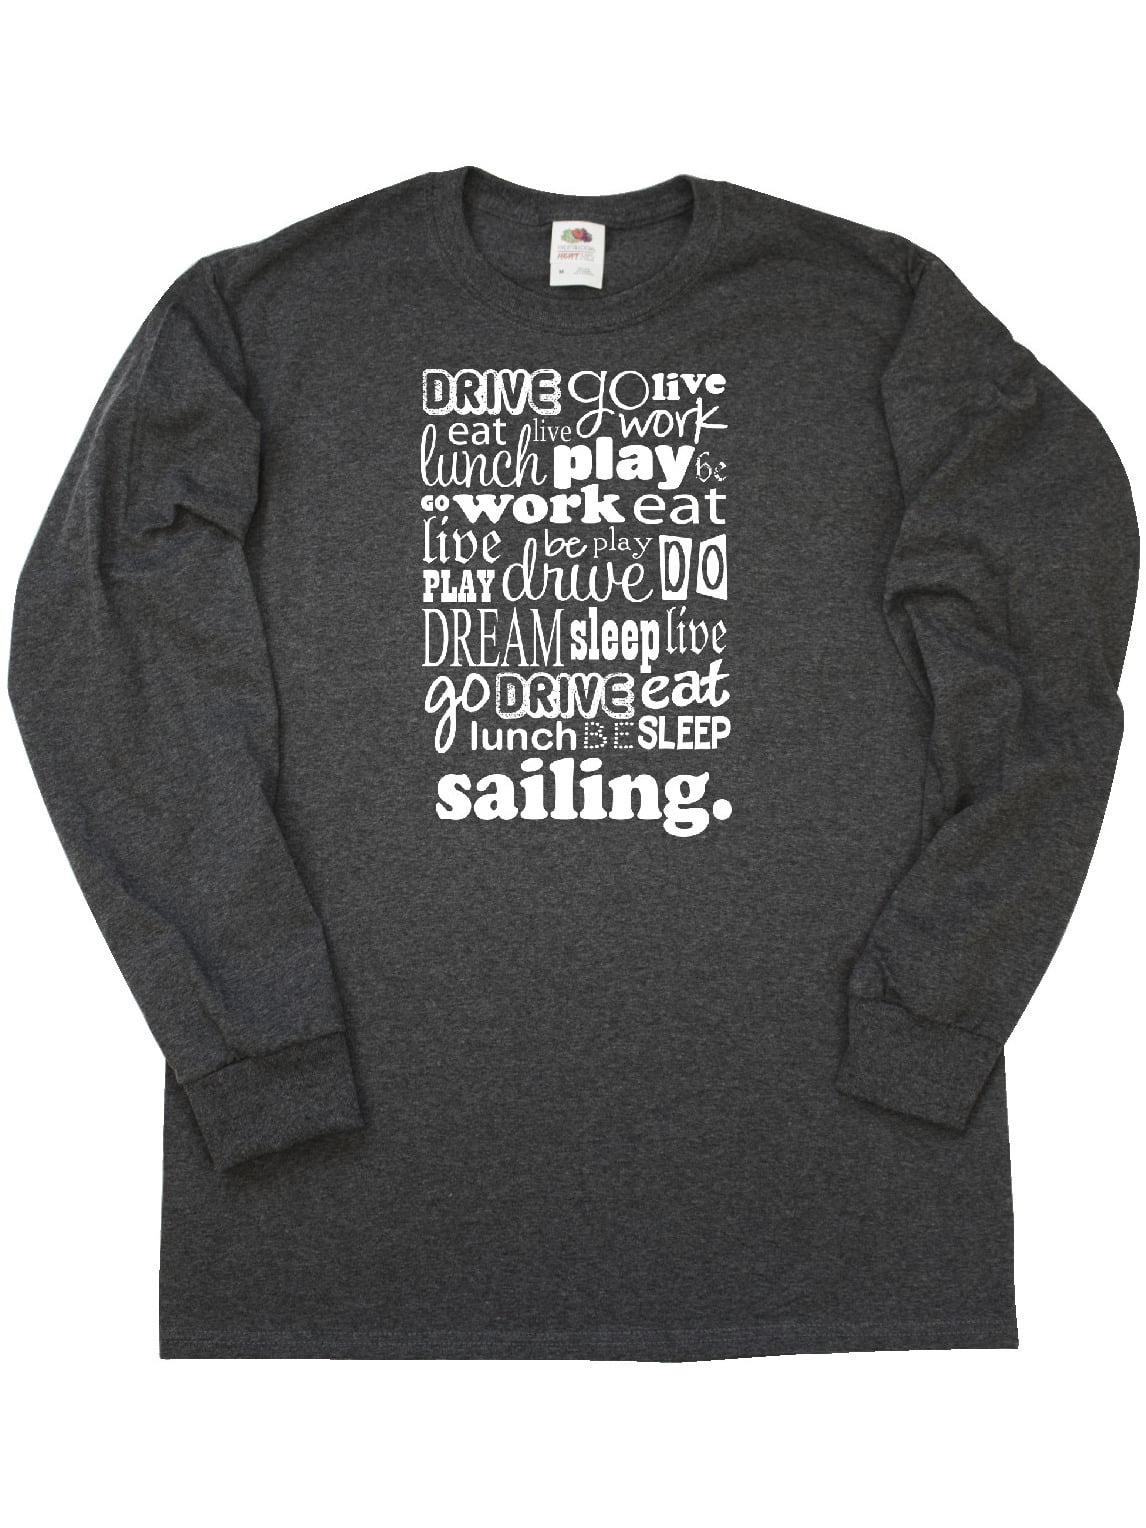 Real Boaters Dont Need Sailing T-Shirt Funny Novelty Mens tee TShirt 